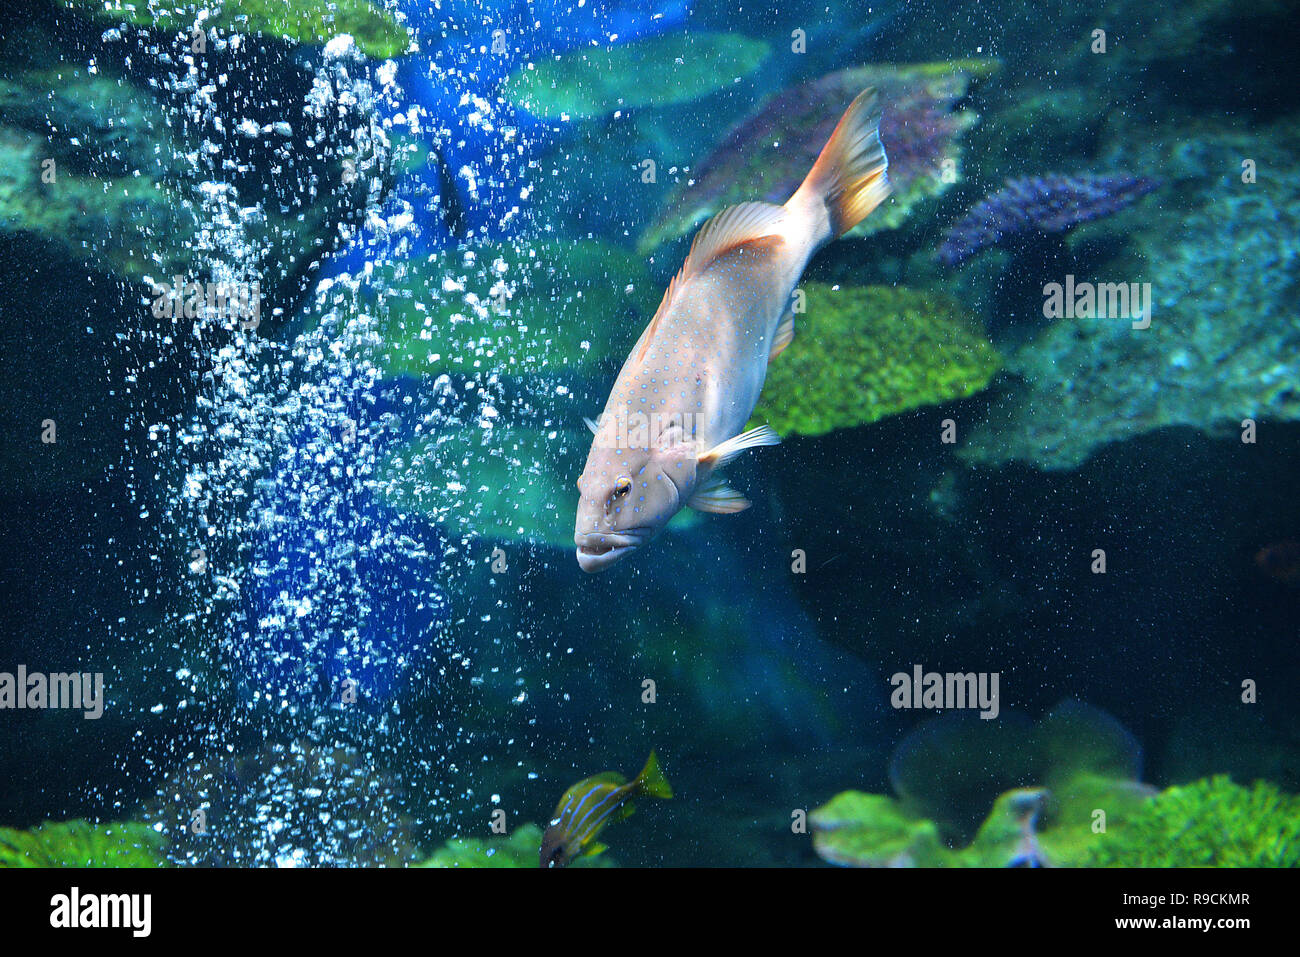 Blue spotted grouper fish ocean / marine life of grouper fish swimming underwater aquarium tank - Plectropomus maculatus fish cephalopholis argus Stock Photo